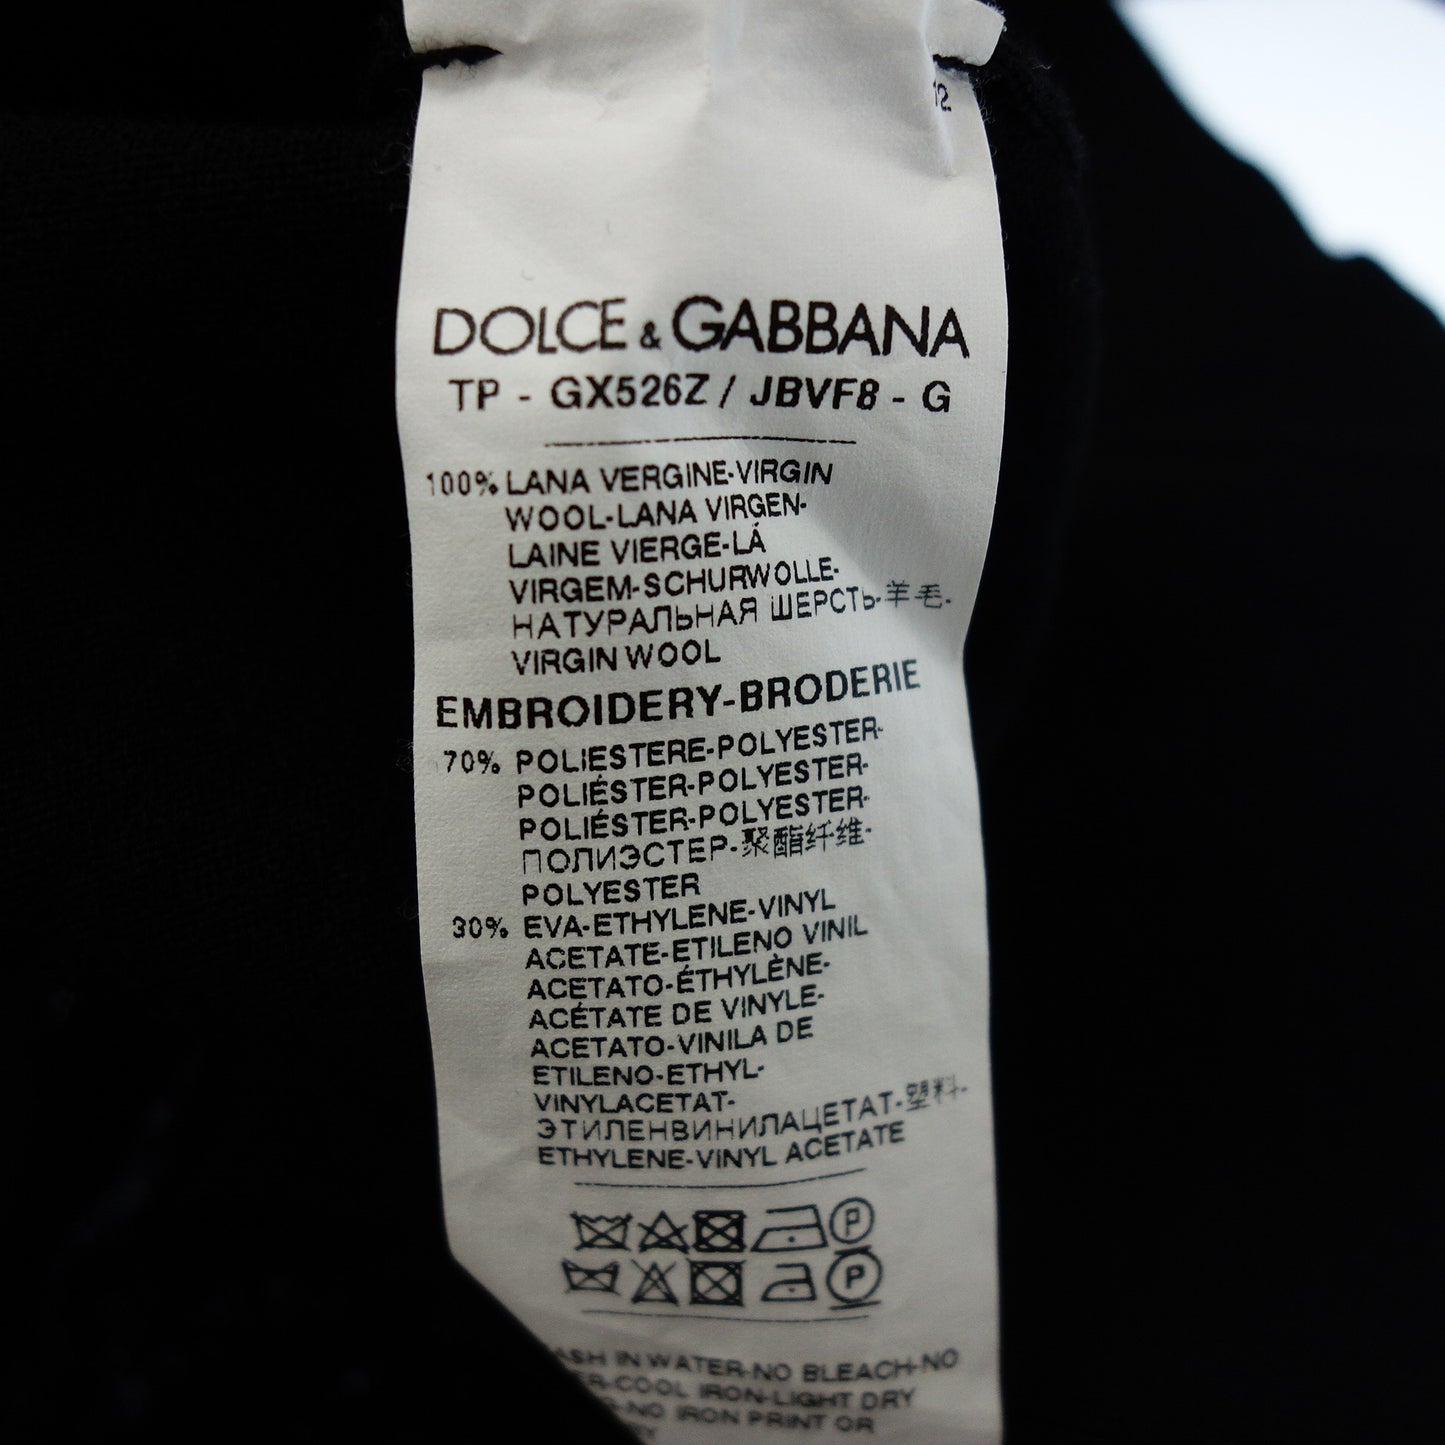 Dolce &amp; Gabbana Knit Sweater Logo Embroidery Men's Black 52 DOLCE&amp;GABBANA [AFB19] [Used] 